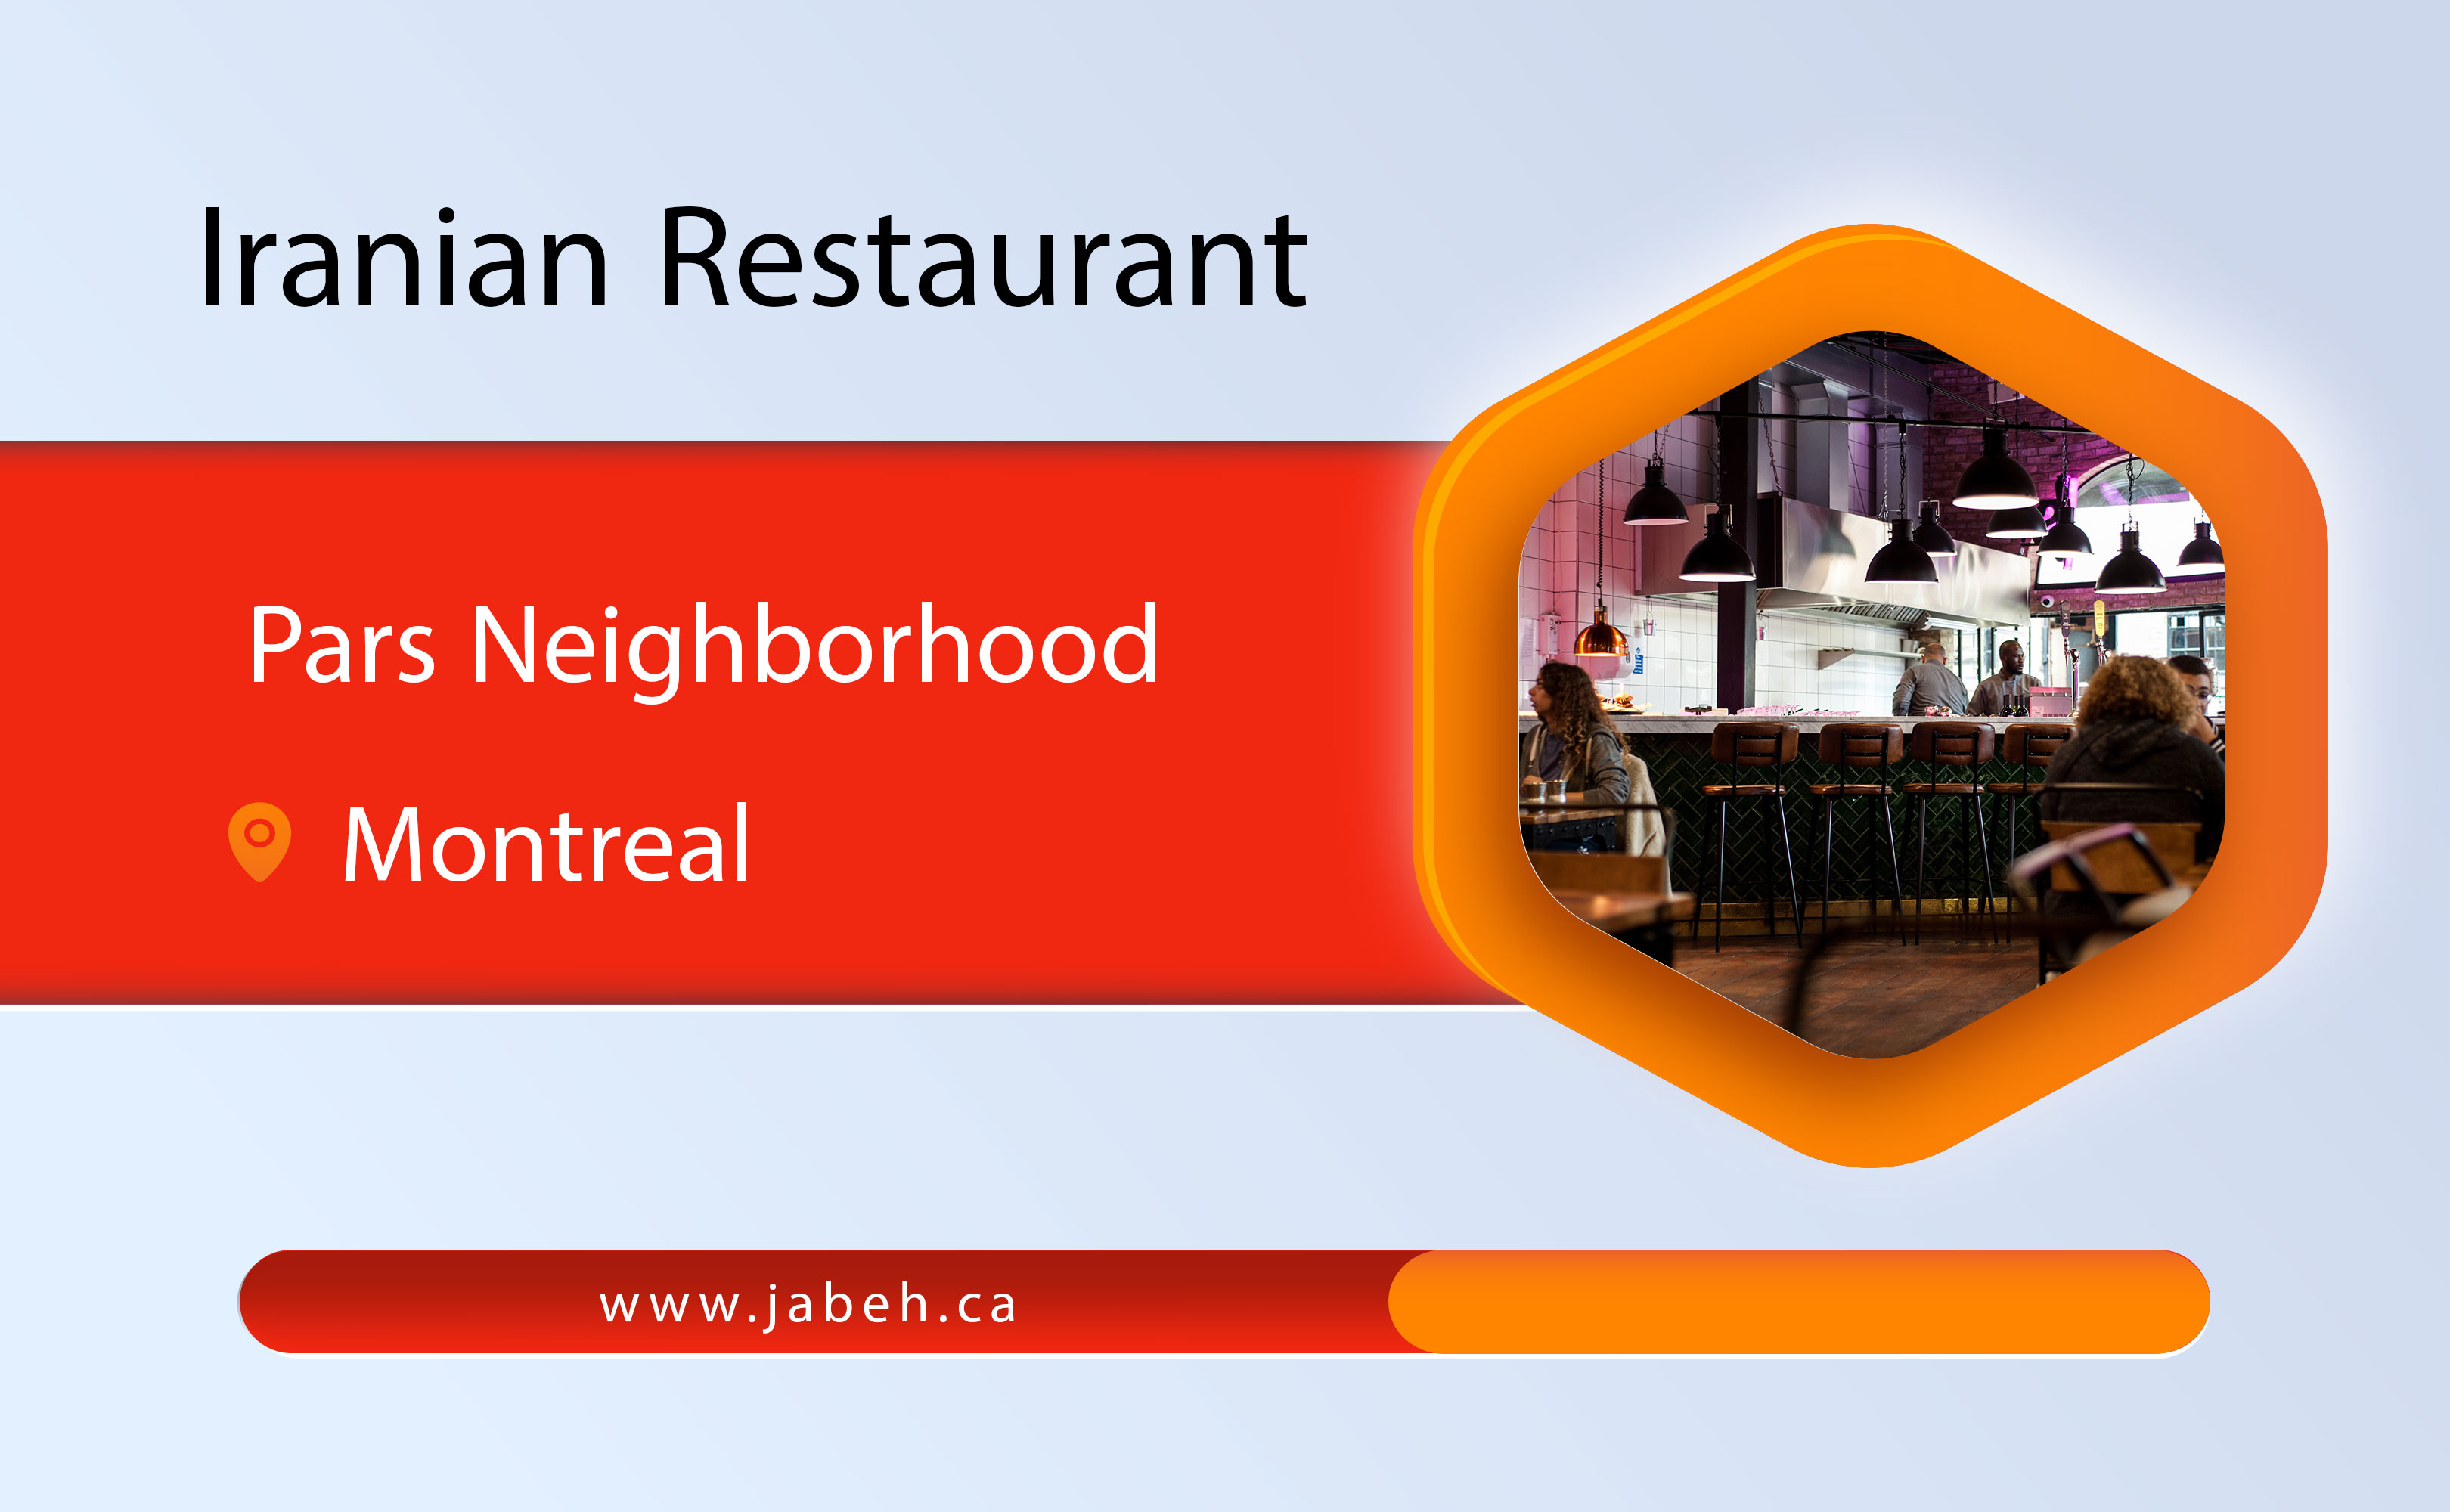 Pars neighborhood Irani restaurant in Montreal